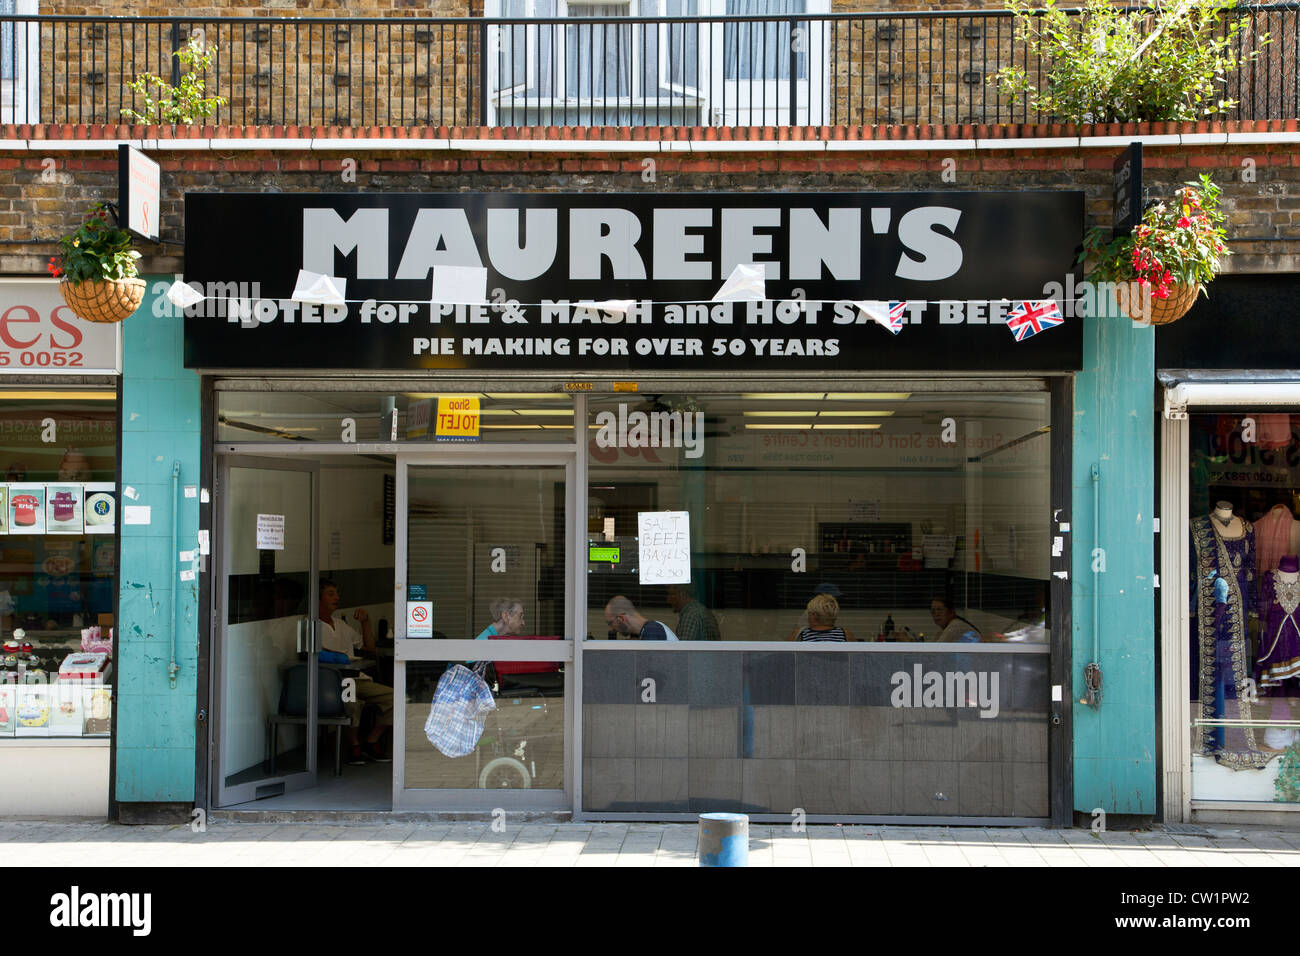 Maureen's Pie & Mash, Chrisp Street Market, Poplar, Tower Hamlets, London, England, UK. Stock Photo